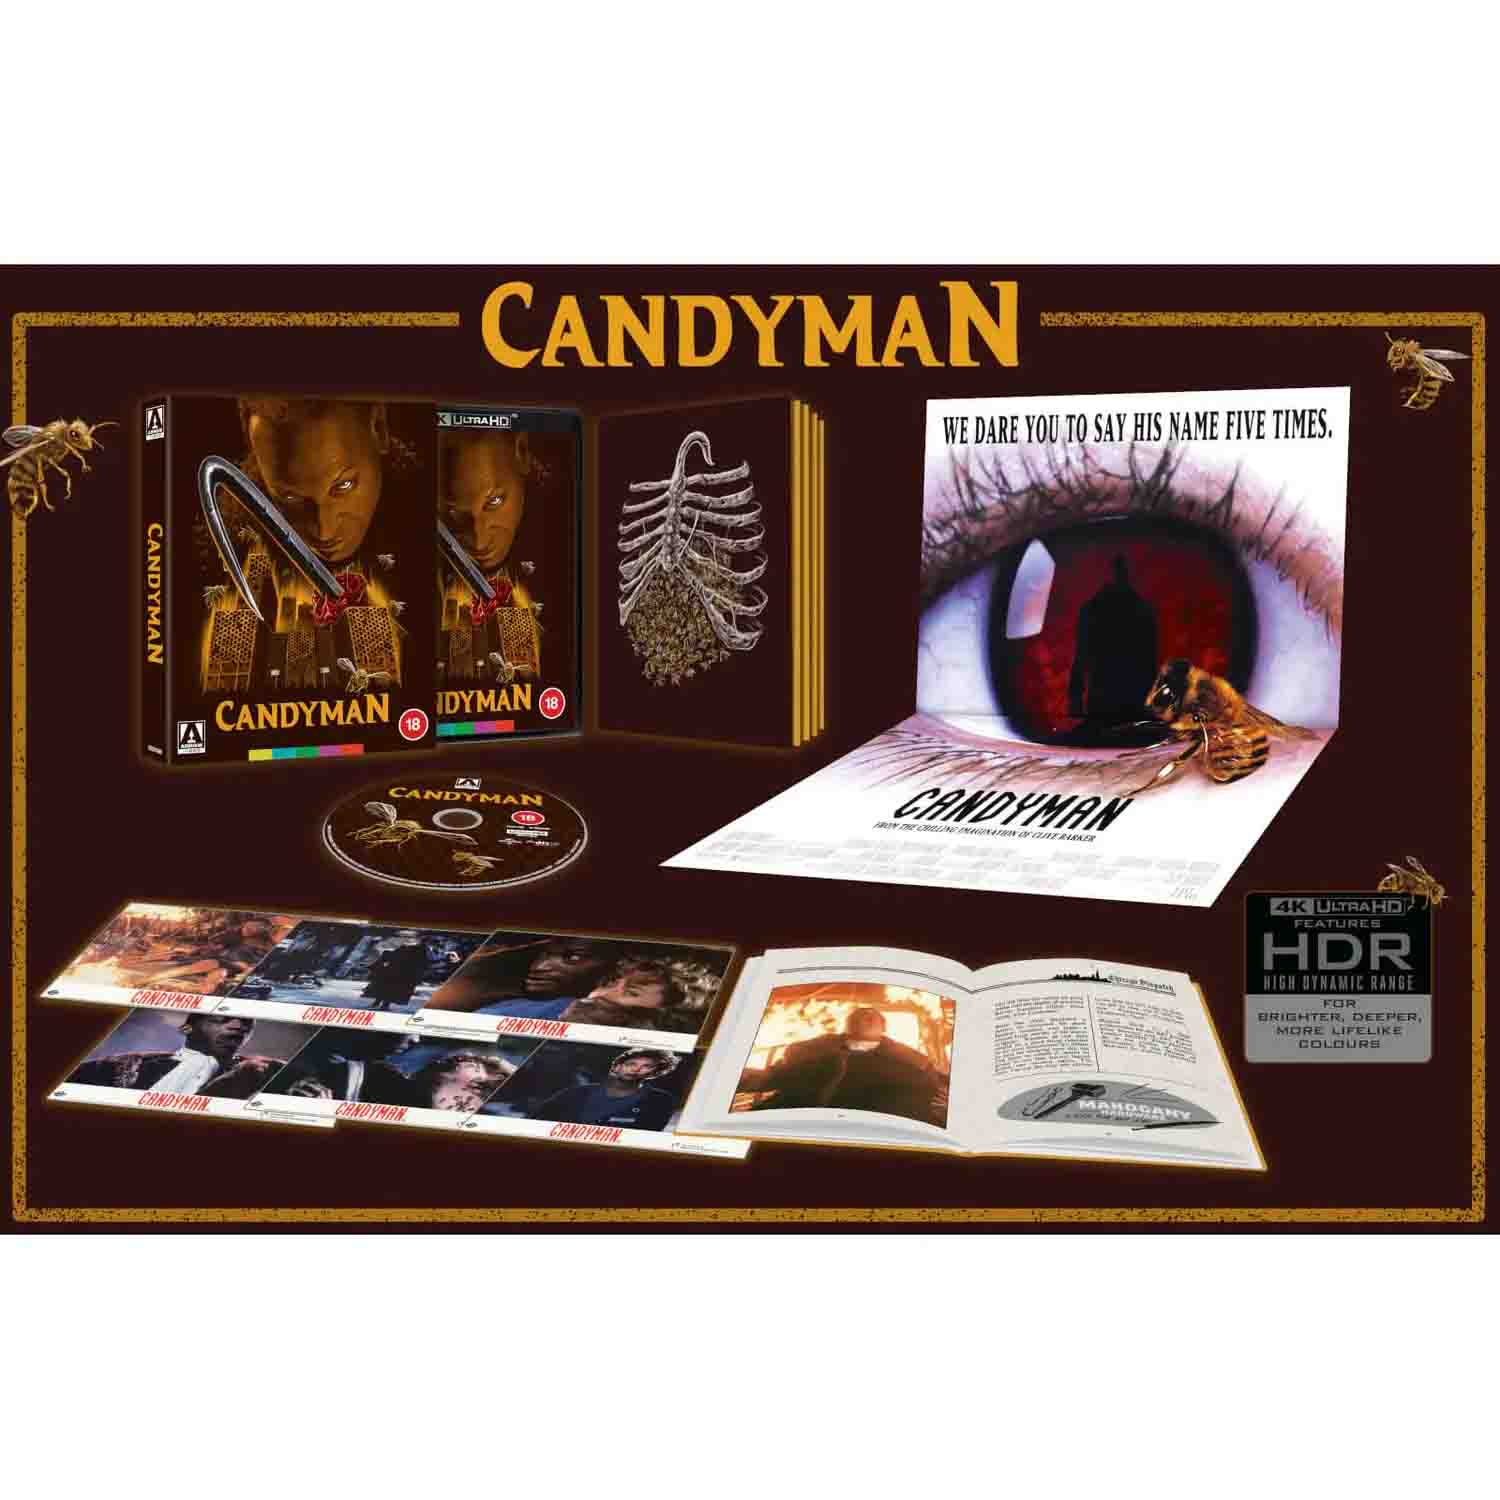 Candyman Limited Edition (UK Import) 4K UHD